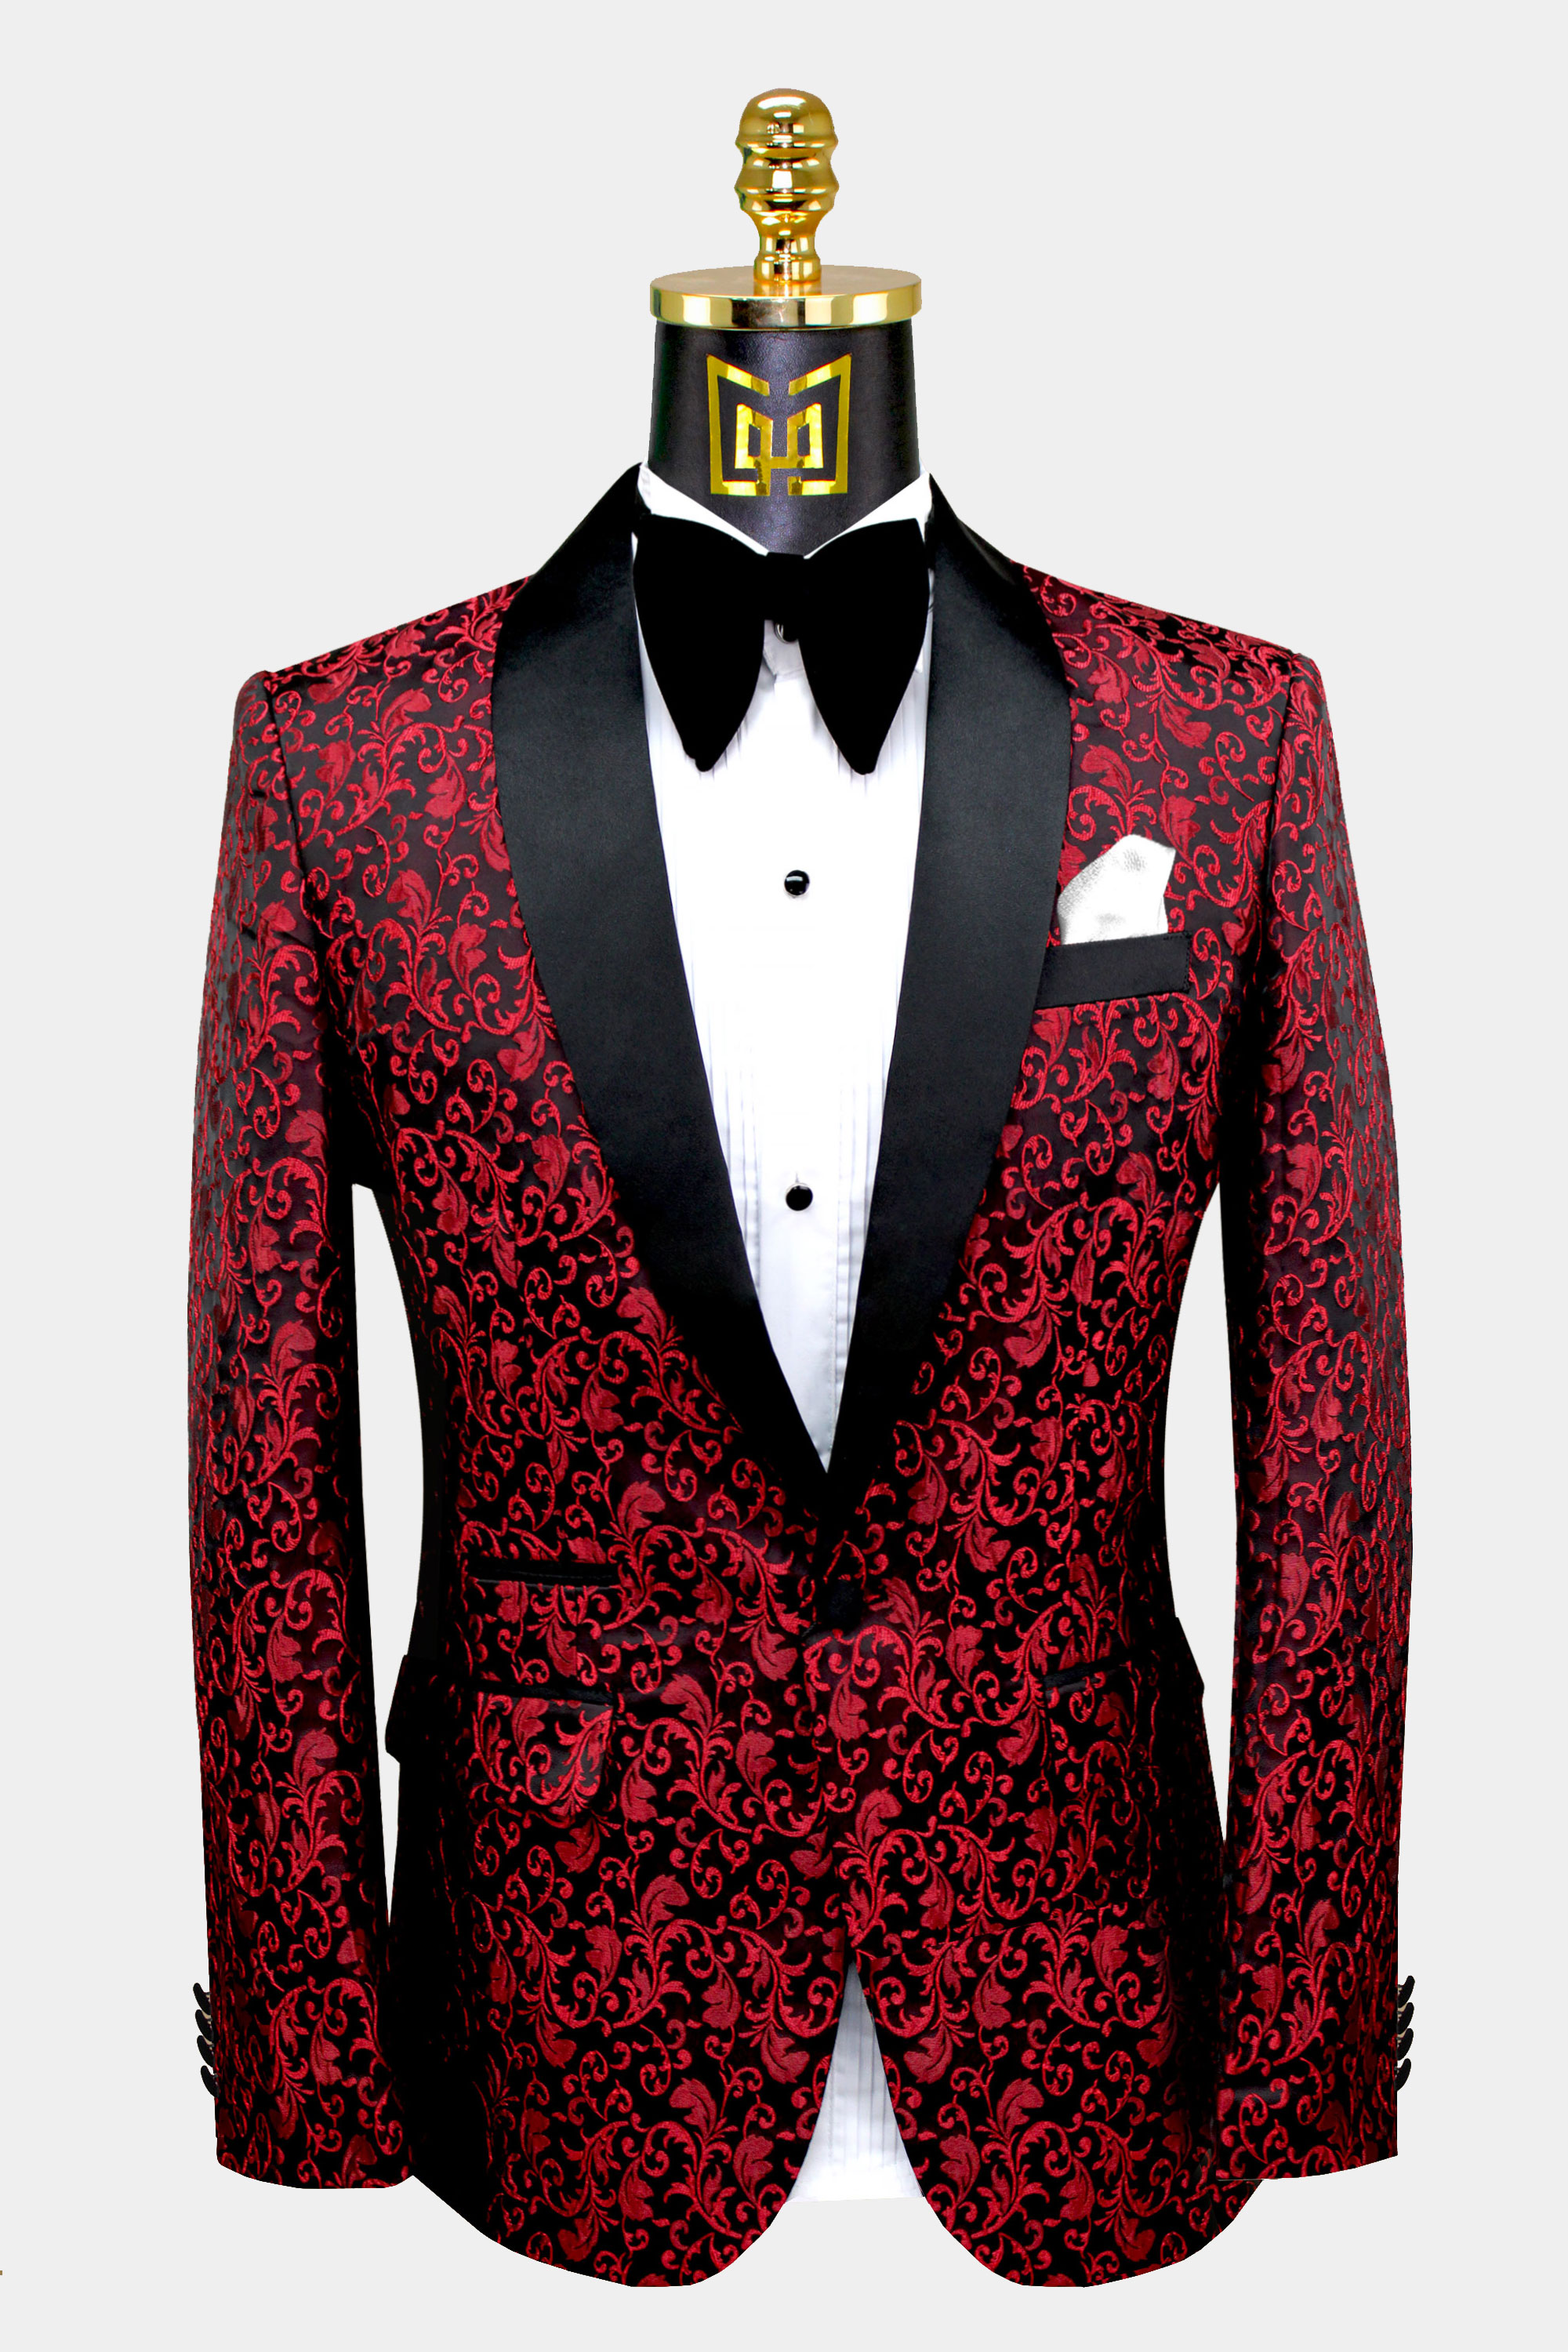 Stunning Red Tuxedo Dinner Jacket Formal Holiday TUXXMAN New Mens Jacket SALE 